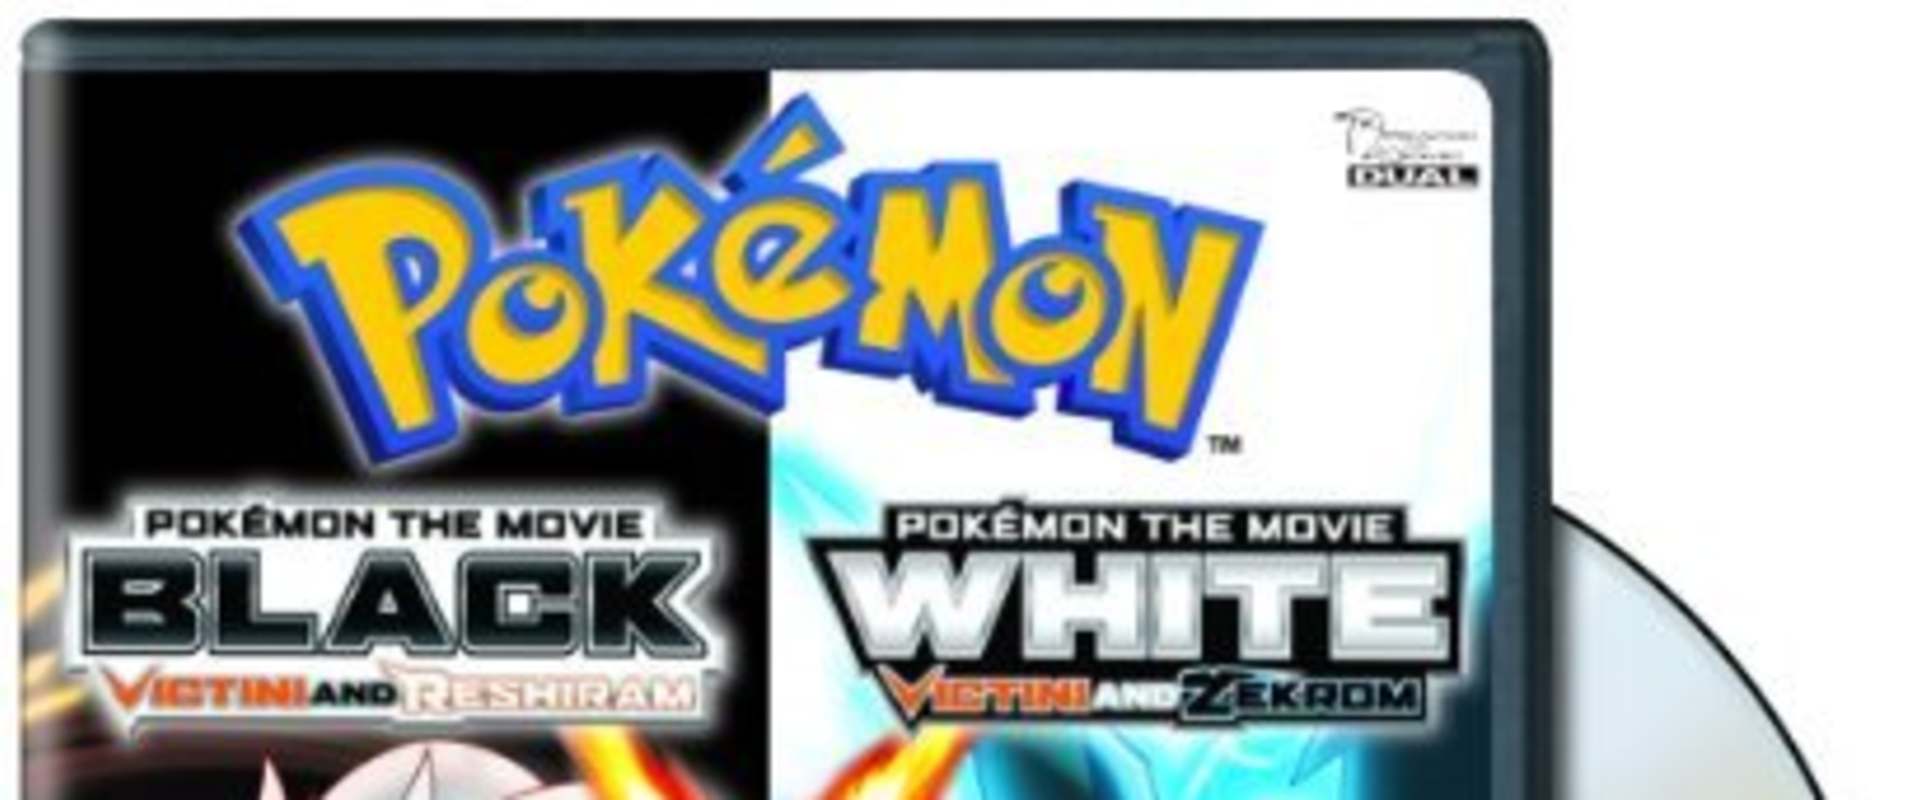 Pokémon the Movie: White - Victini and Zekrom background 2